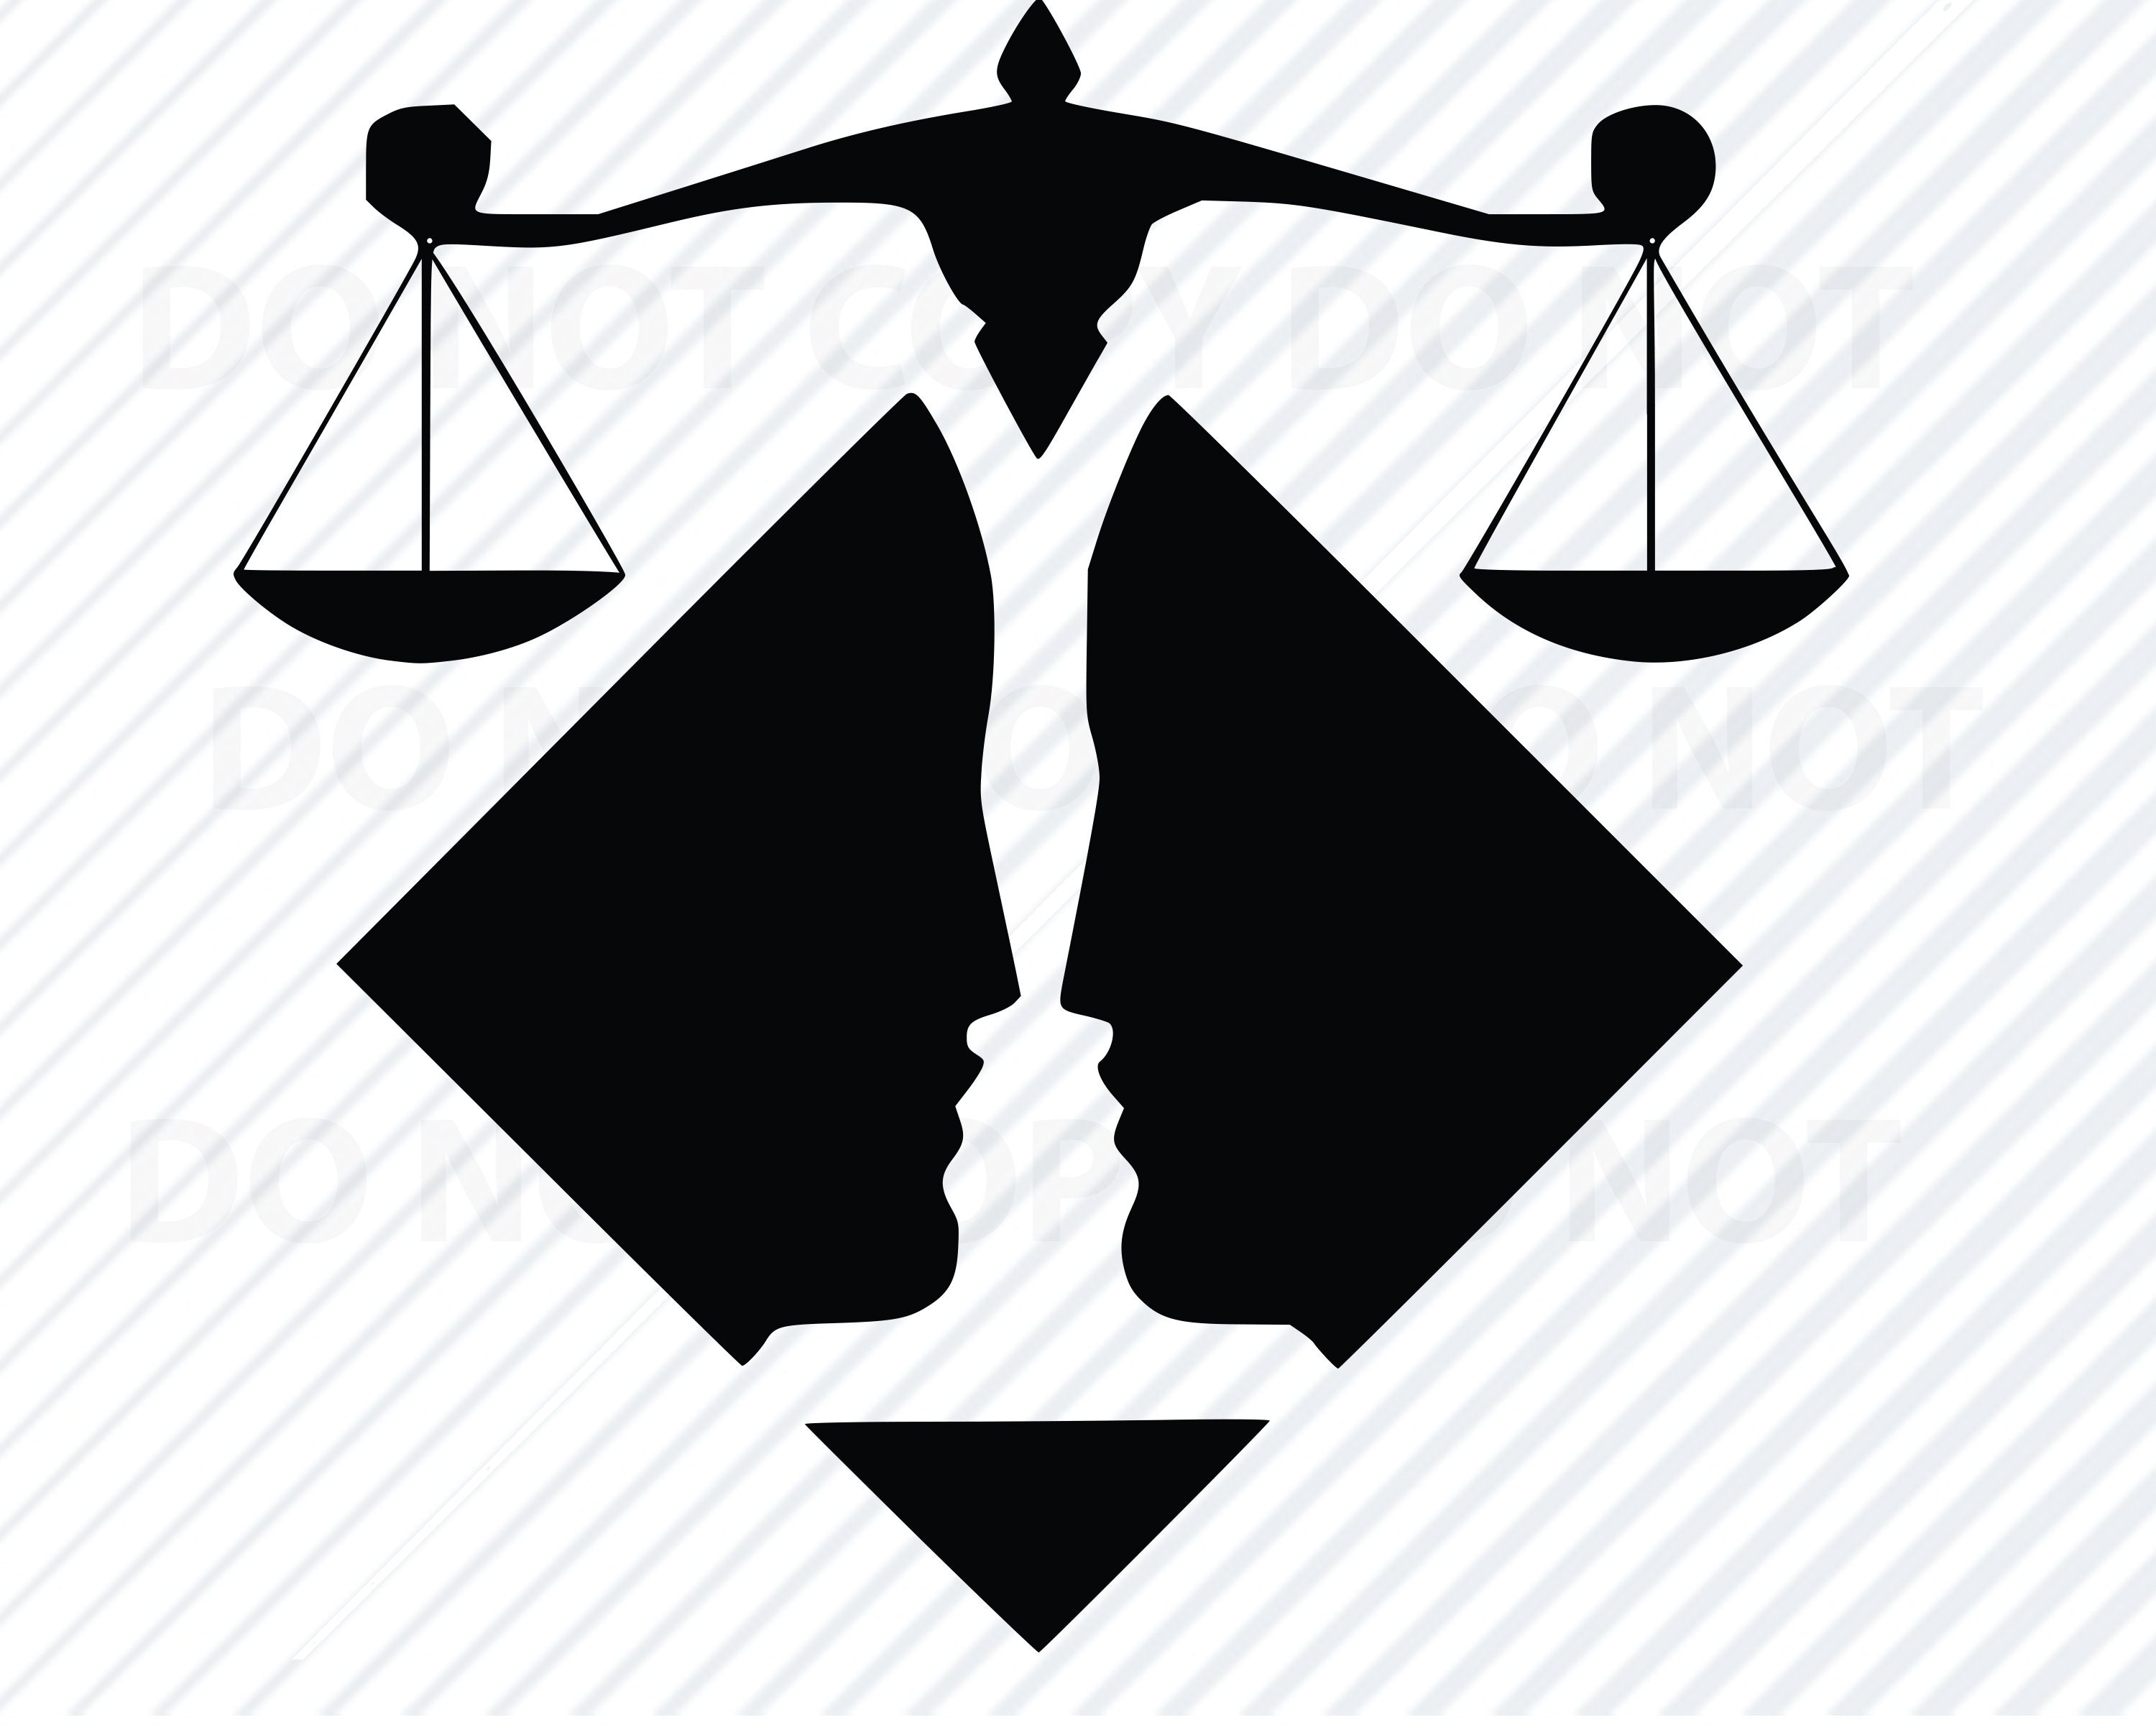 Justice balance symbol cute kawaii cartoon Vector Image